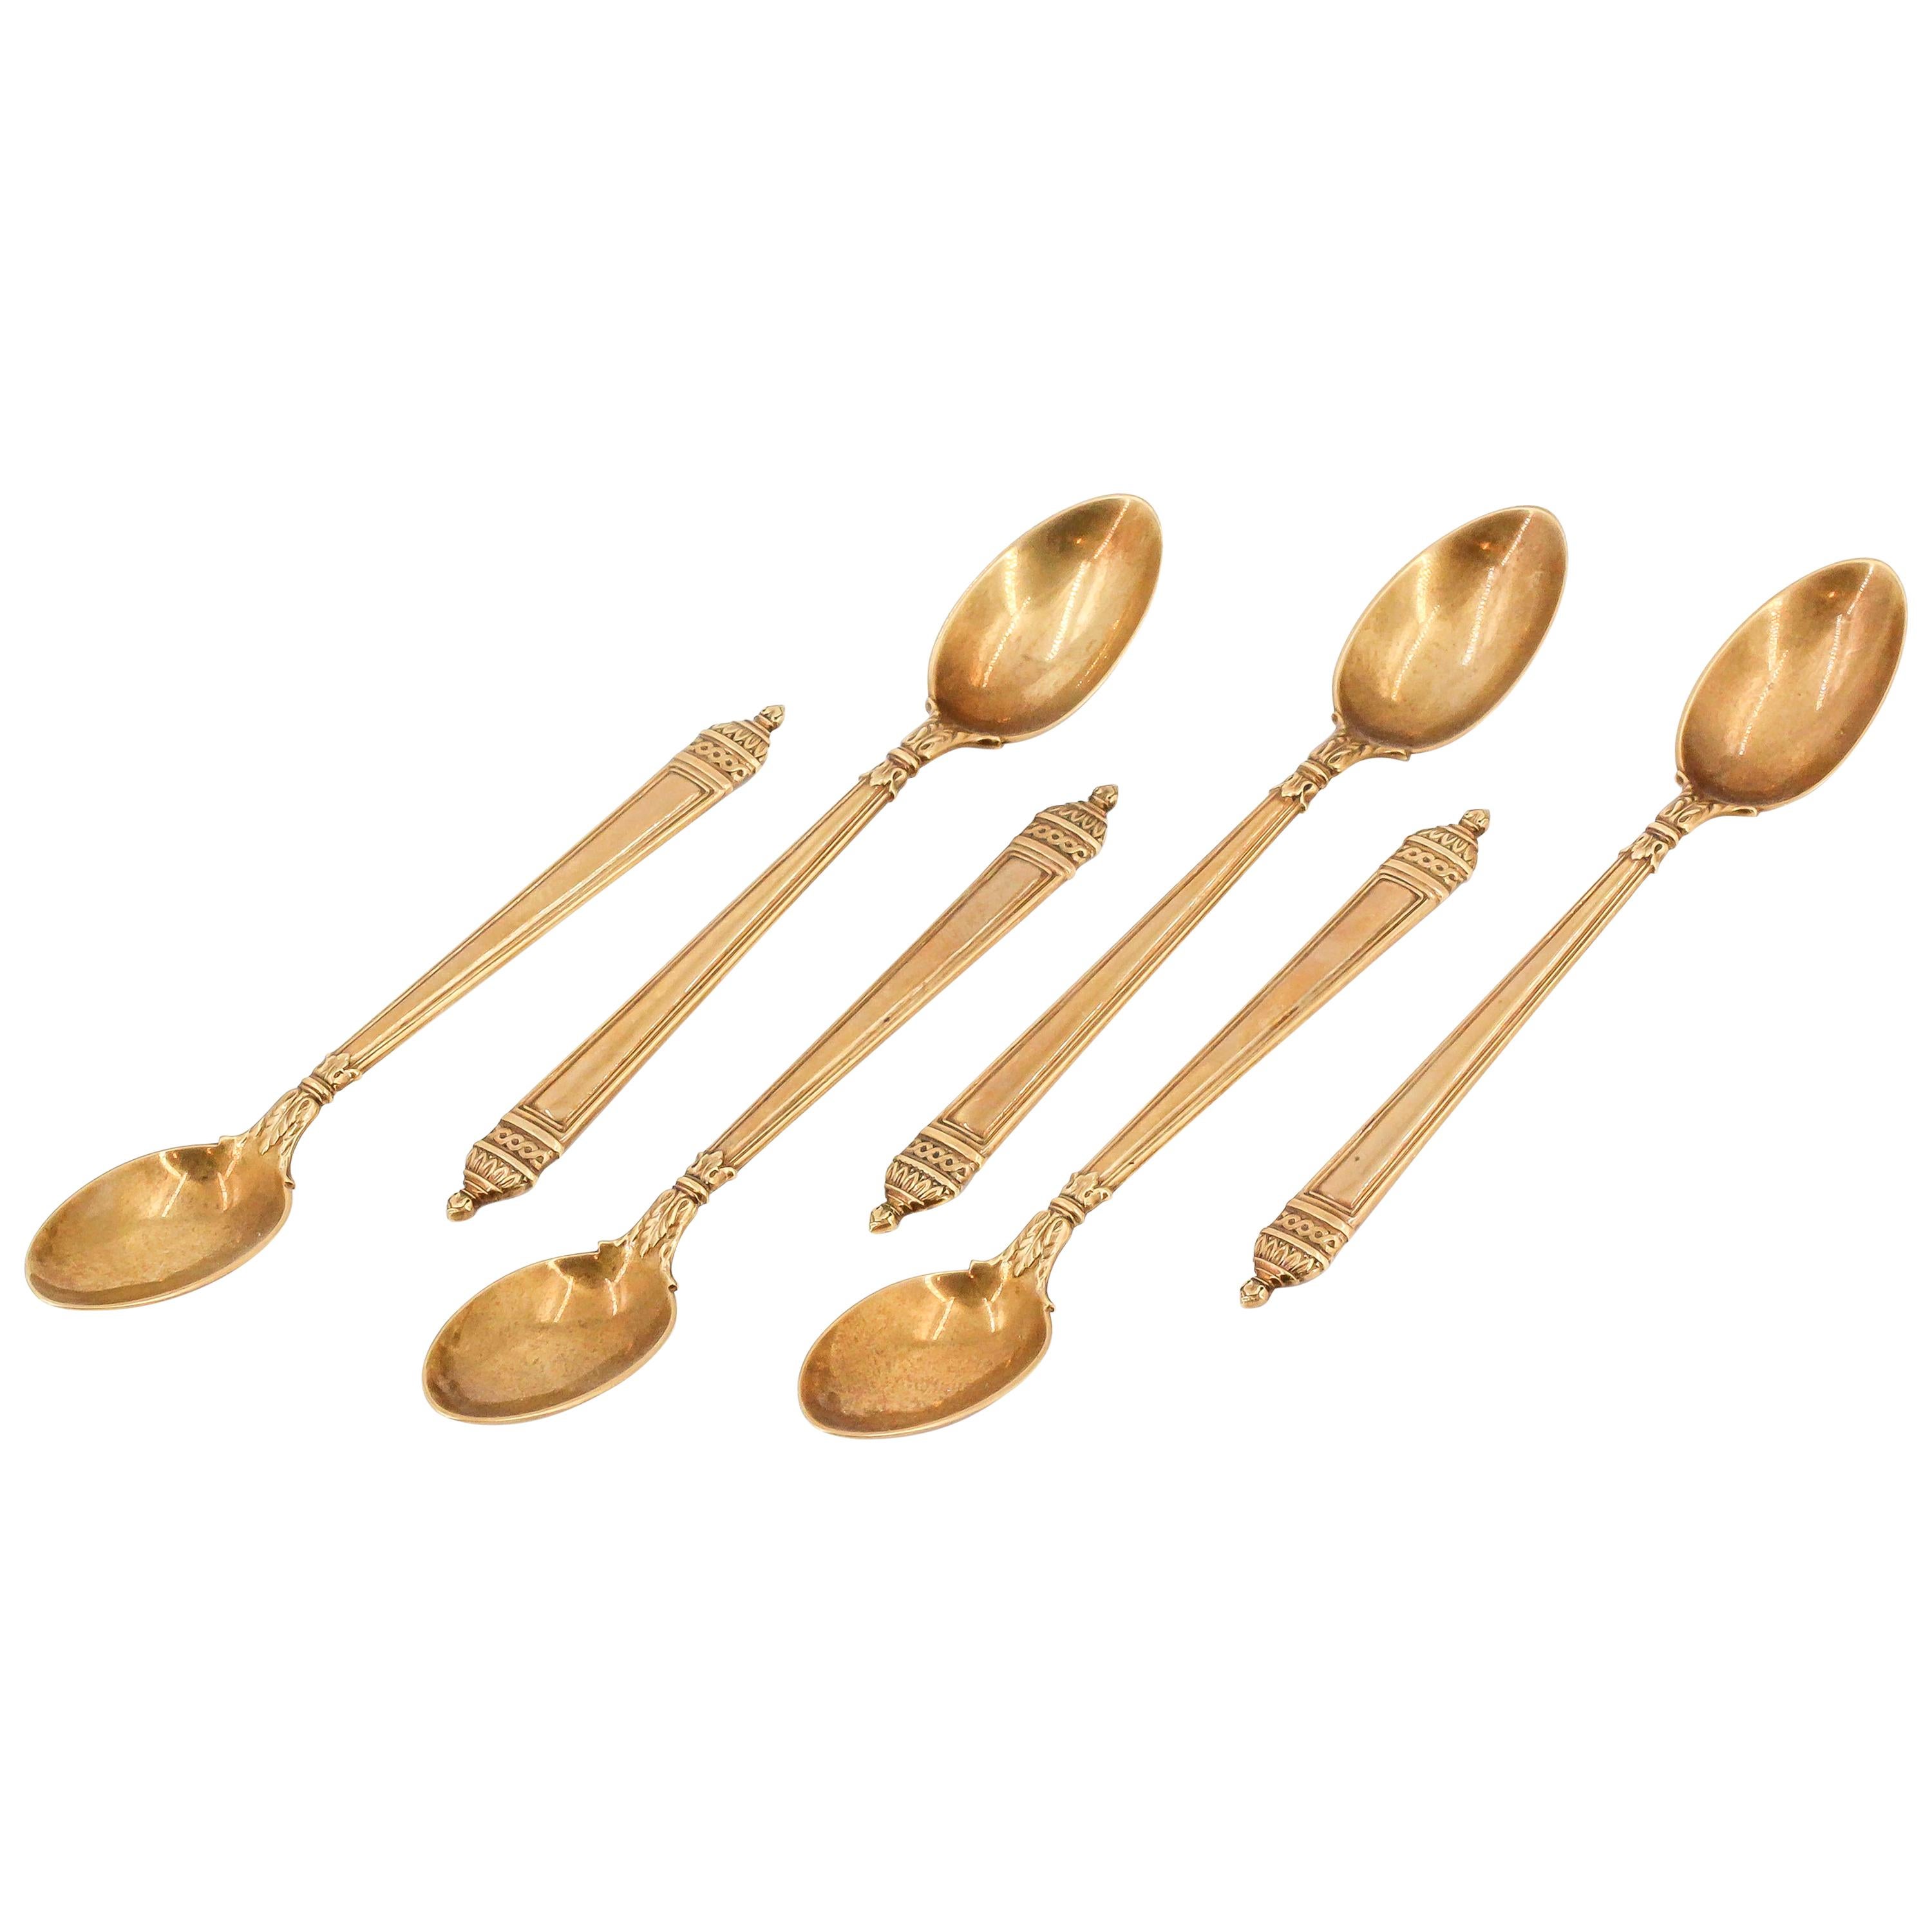 Tiffany & Co. 18 Karat Gold Set of 6 Tea Spoons